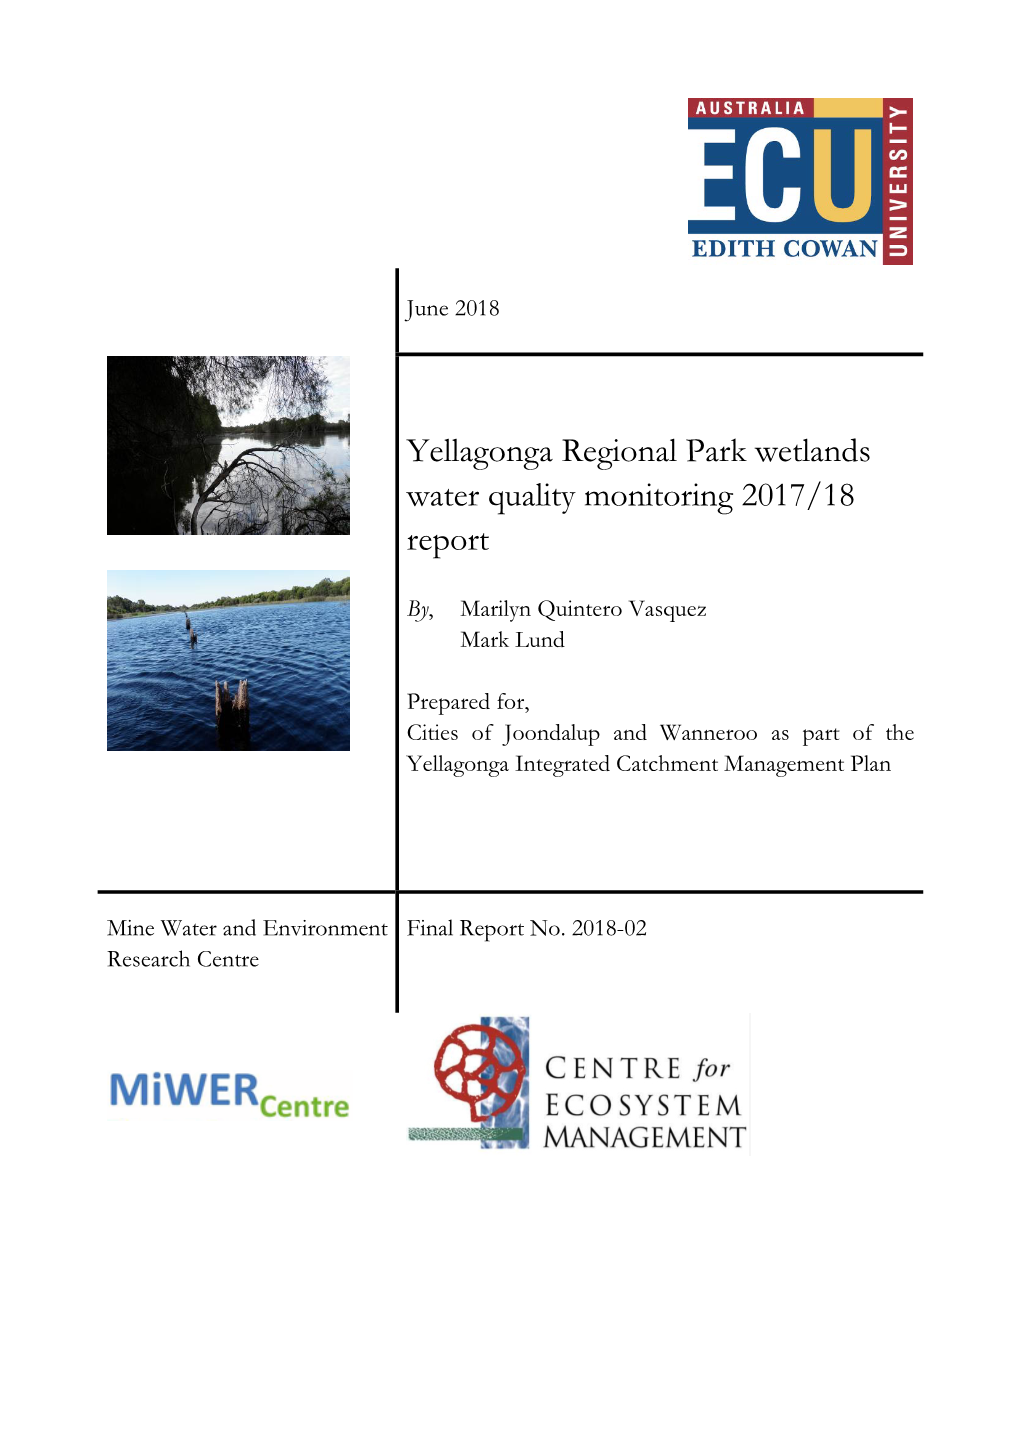 Yellagonga Regional Park Wetlands Water Quality Monitoring 2017/18 Report